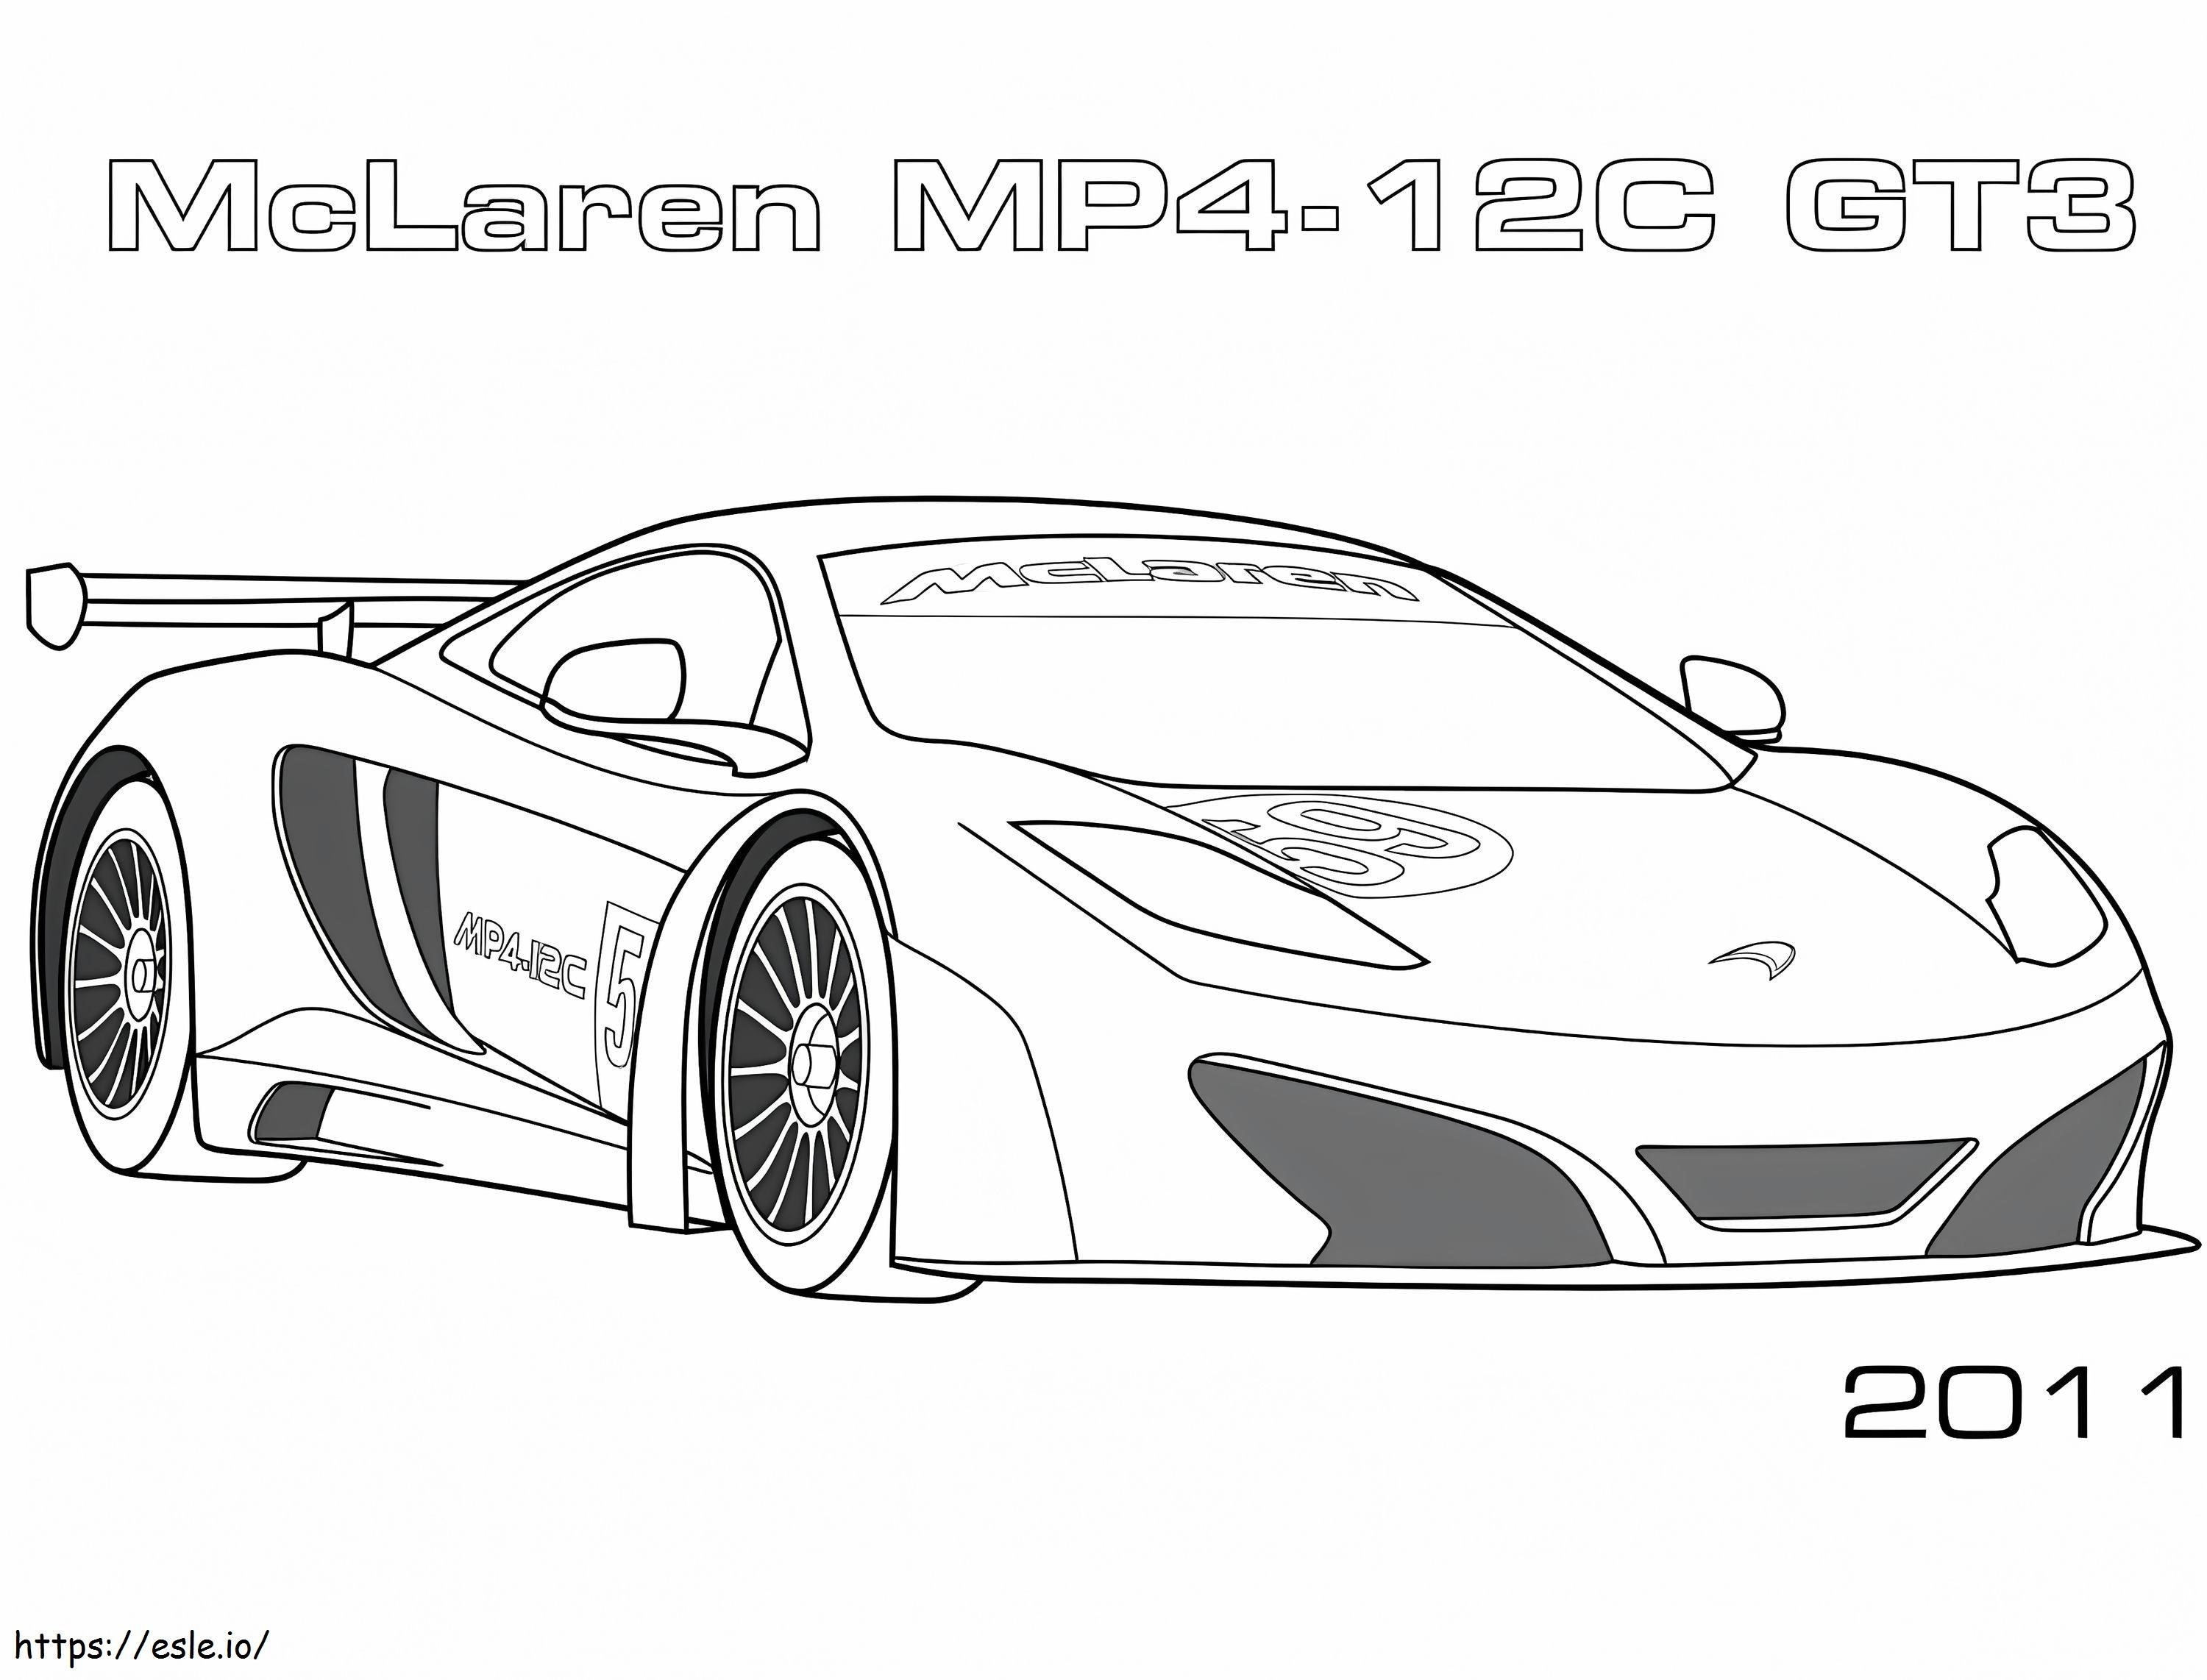  McLaren MP4 12C GT3 ausmalbilder